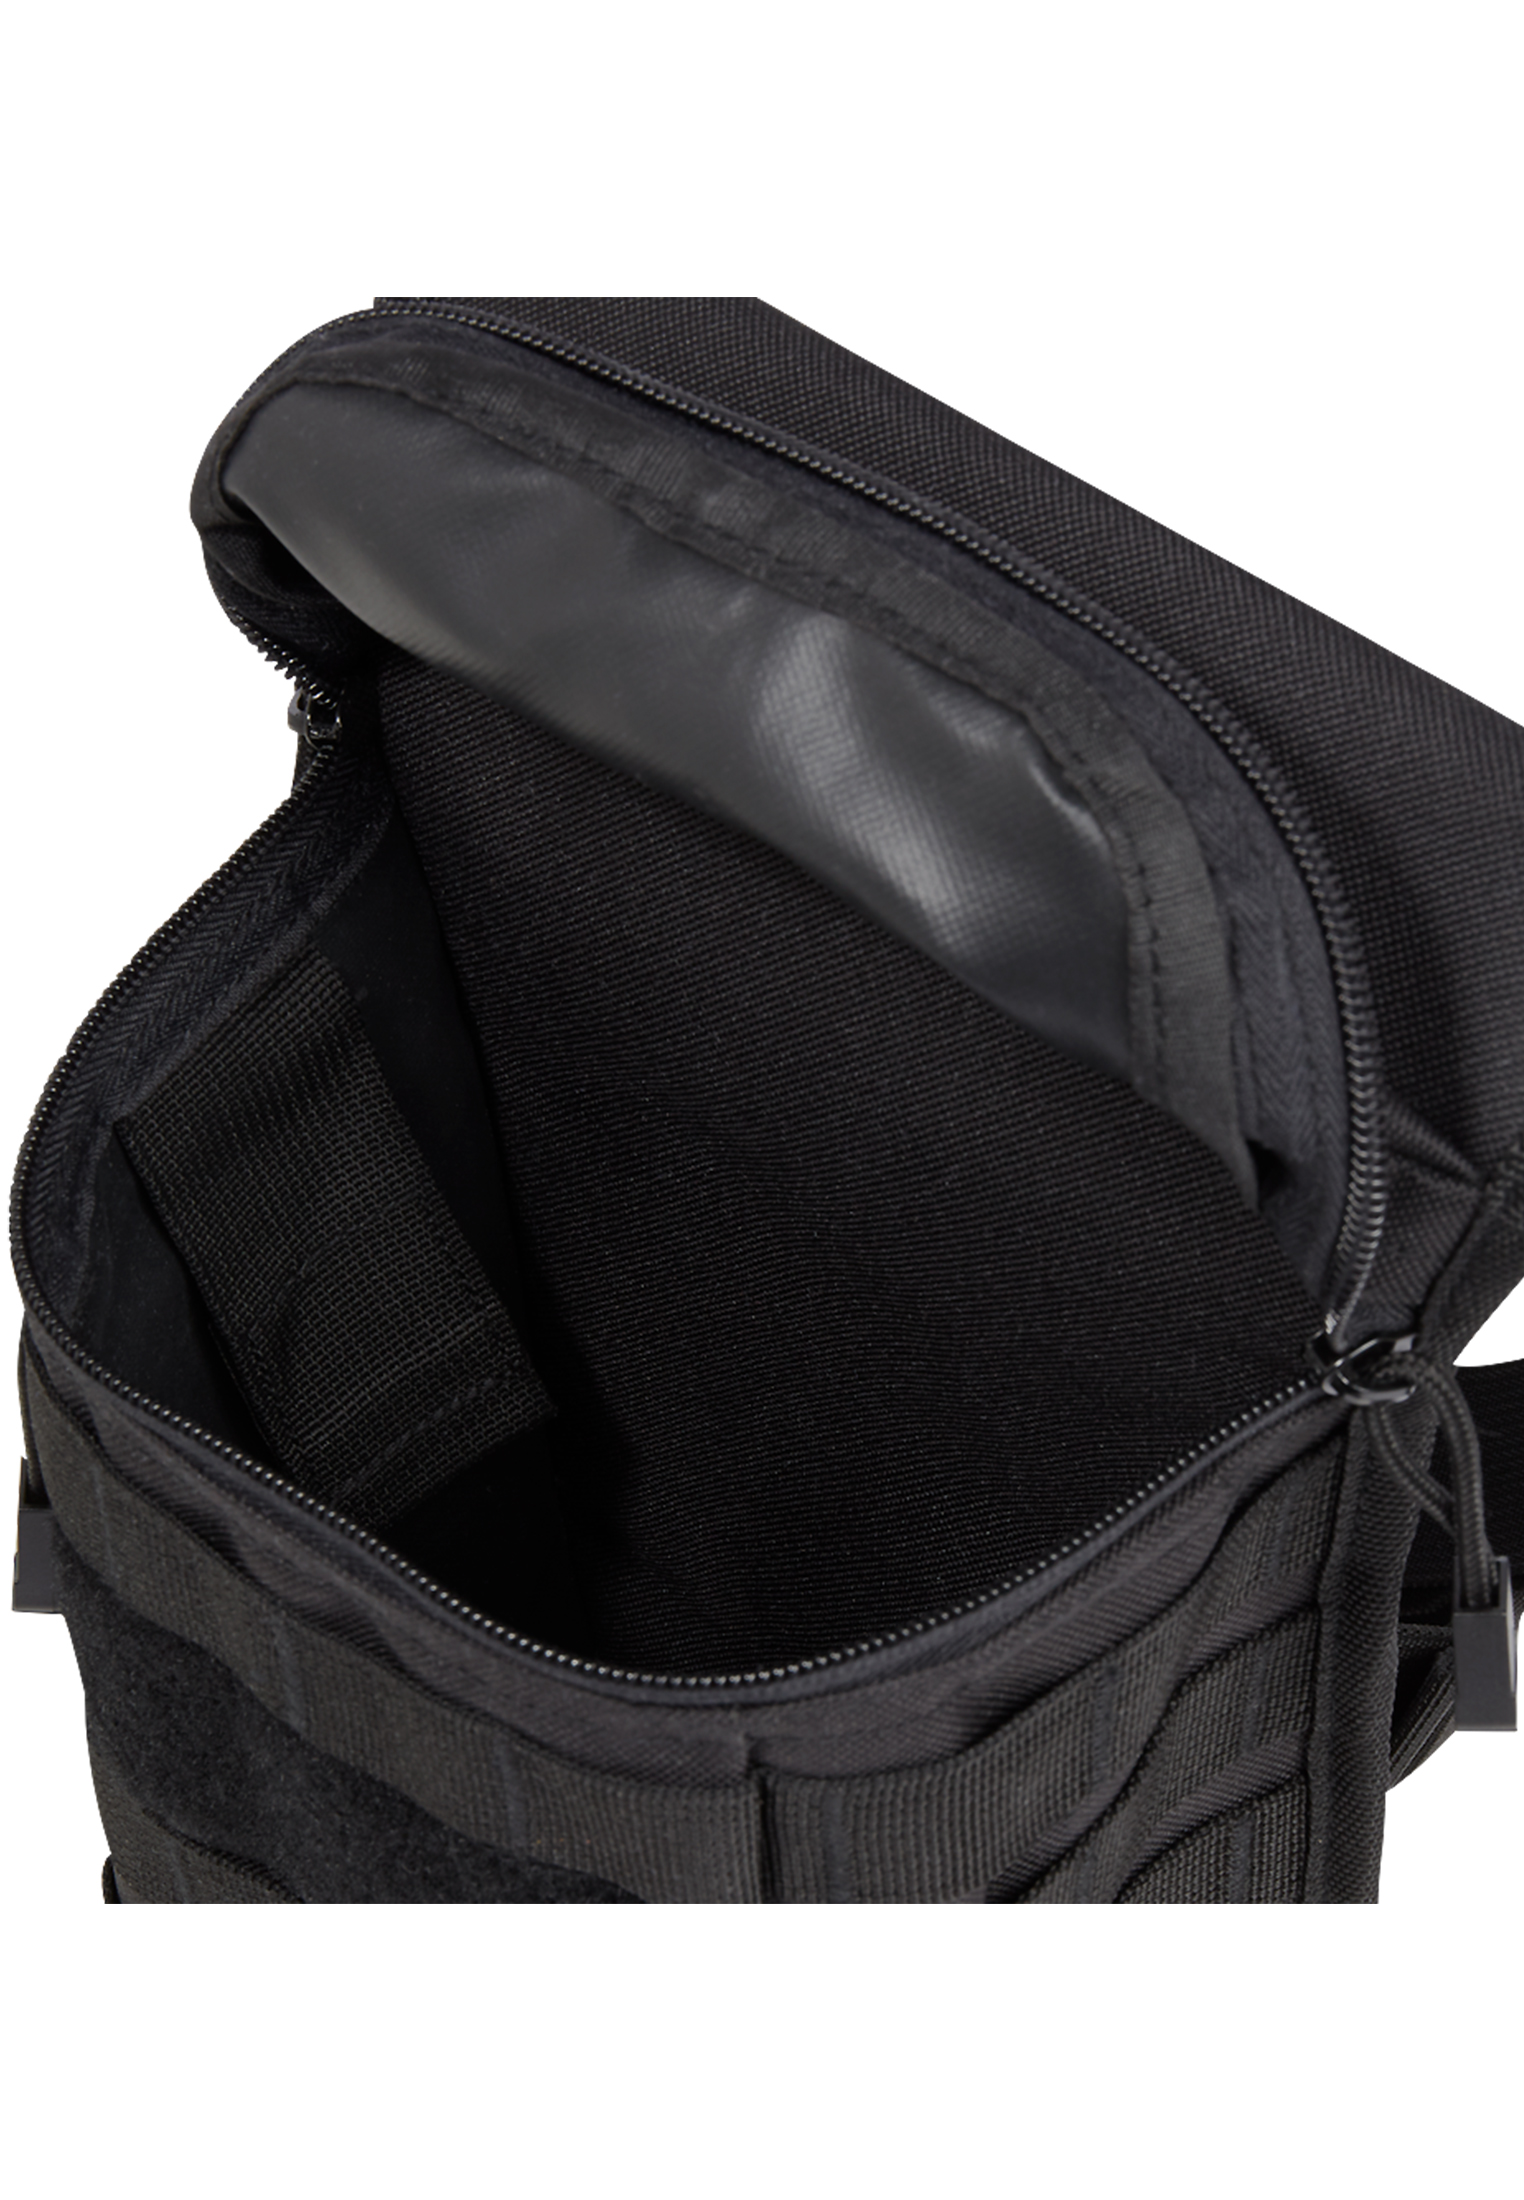 Taschen side kick bag No.2 in Farbe black